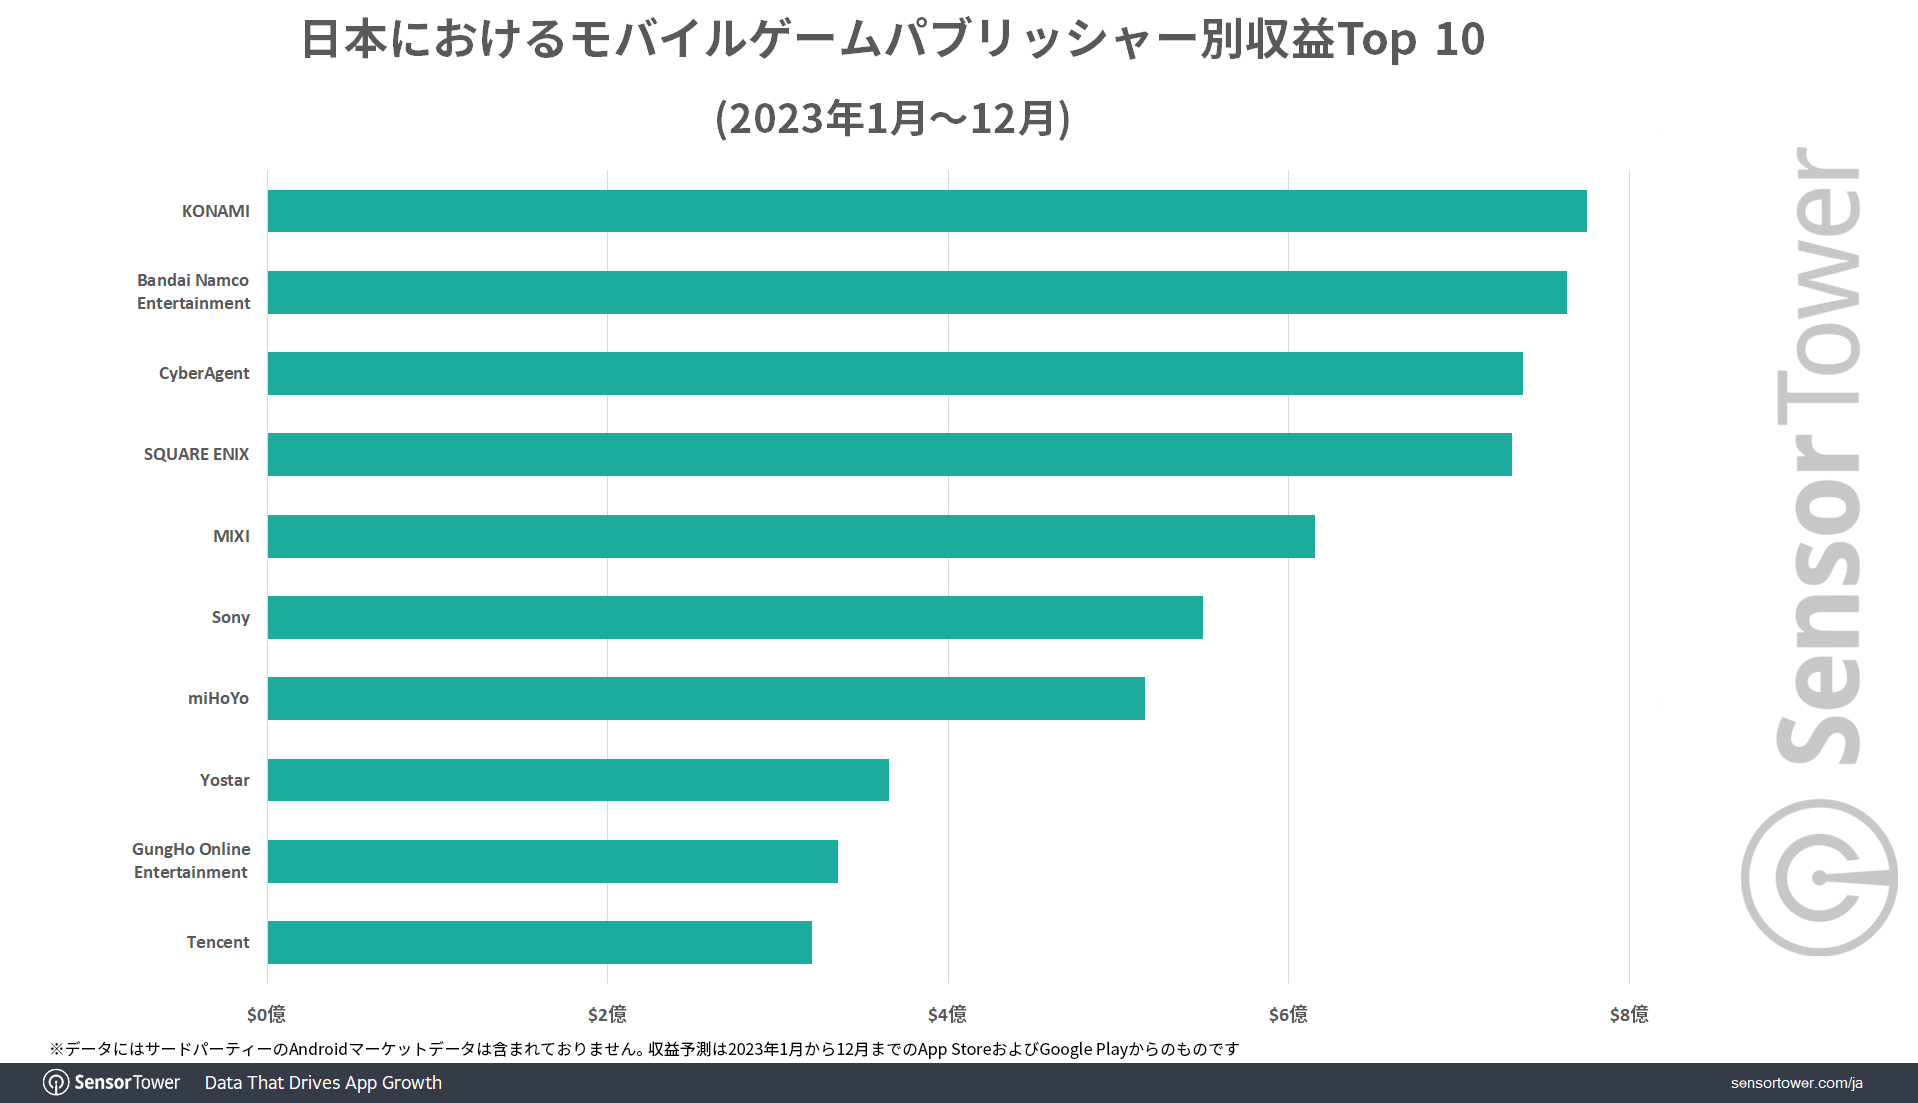 Revenue-Top-10-by-publisher-Japan